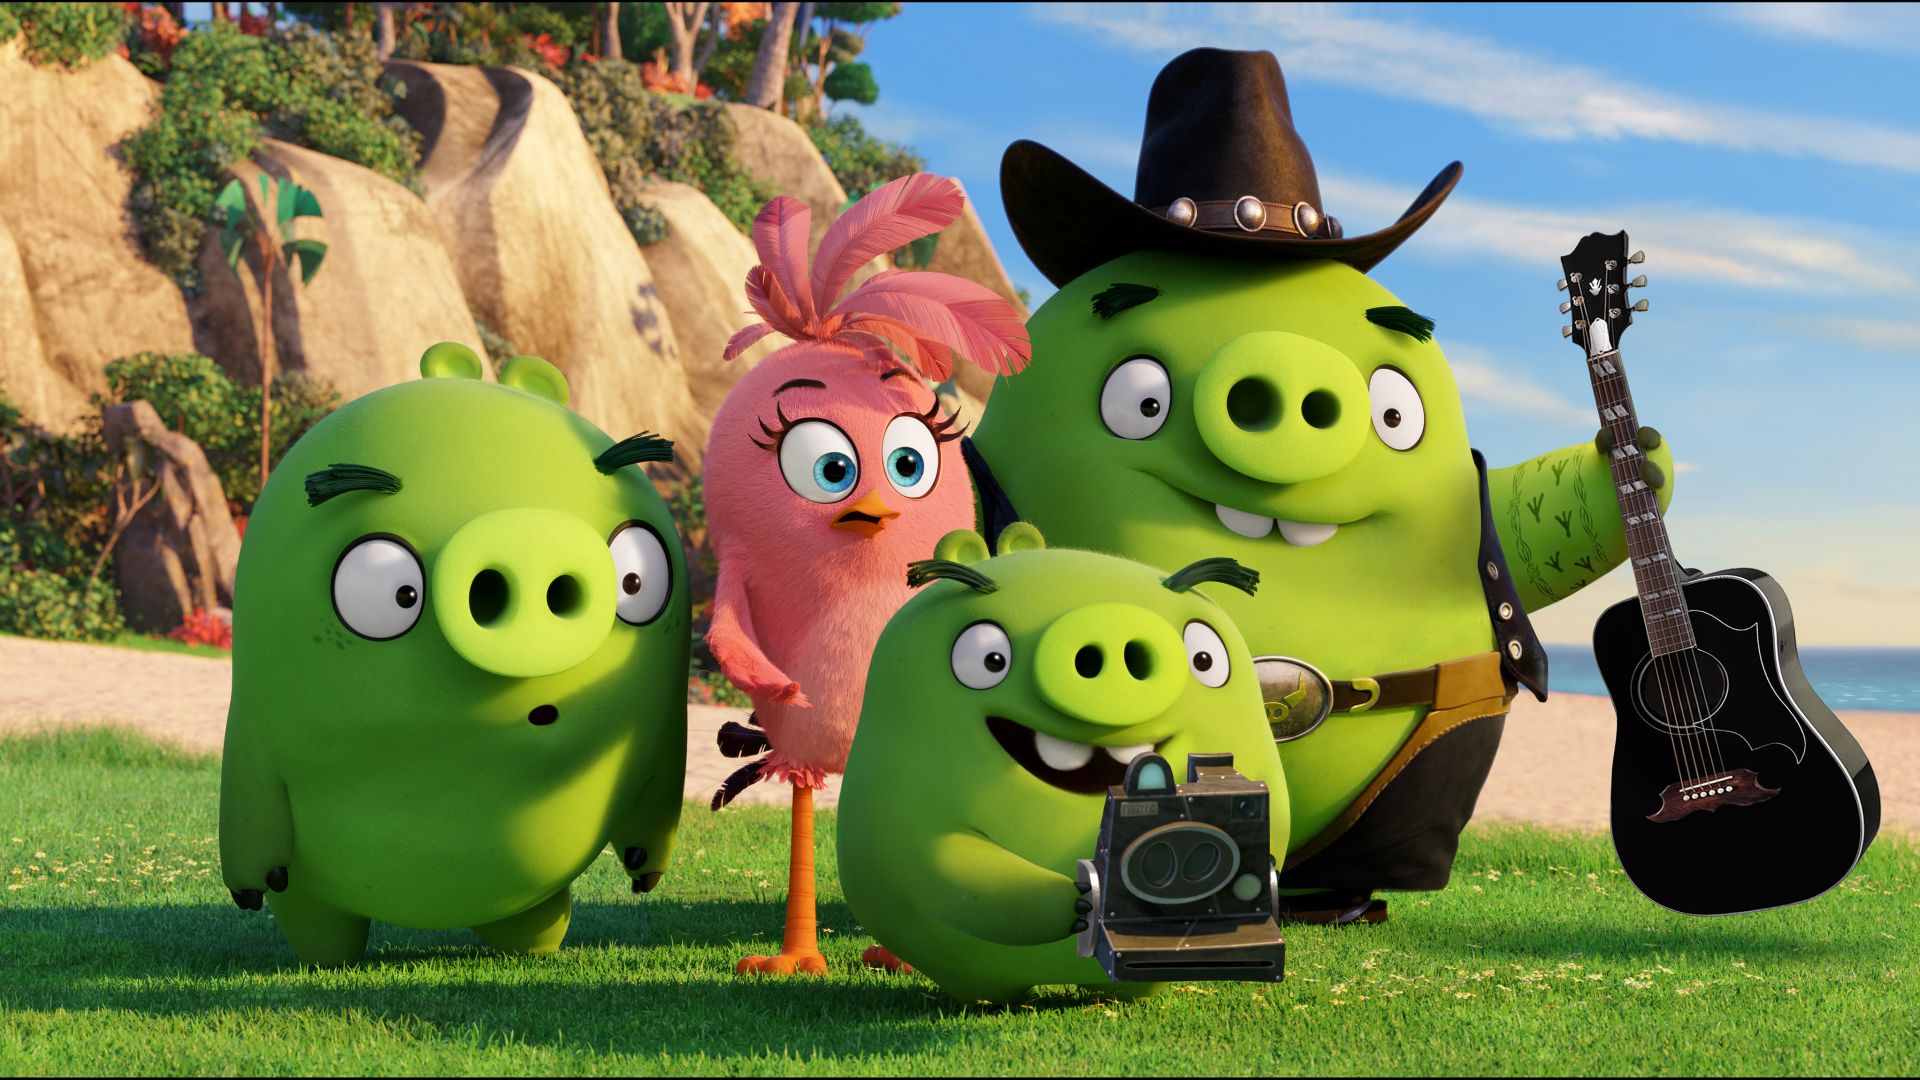 Angry Birds, Зеленые свиньи, семья, мультфильм 2016, Angry Birds, Green pigs, family, Animation 2016 (horizontal)